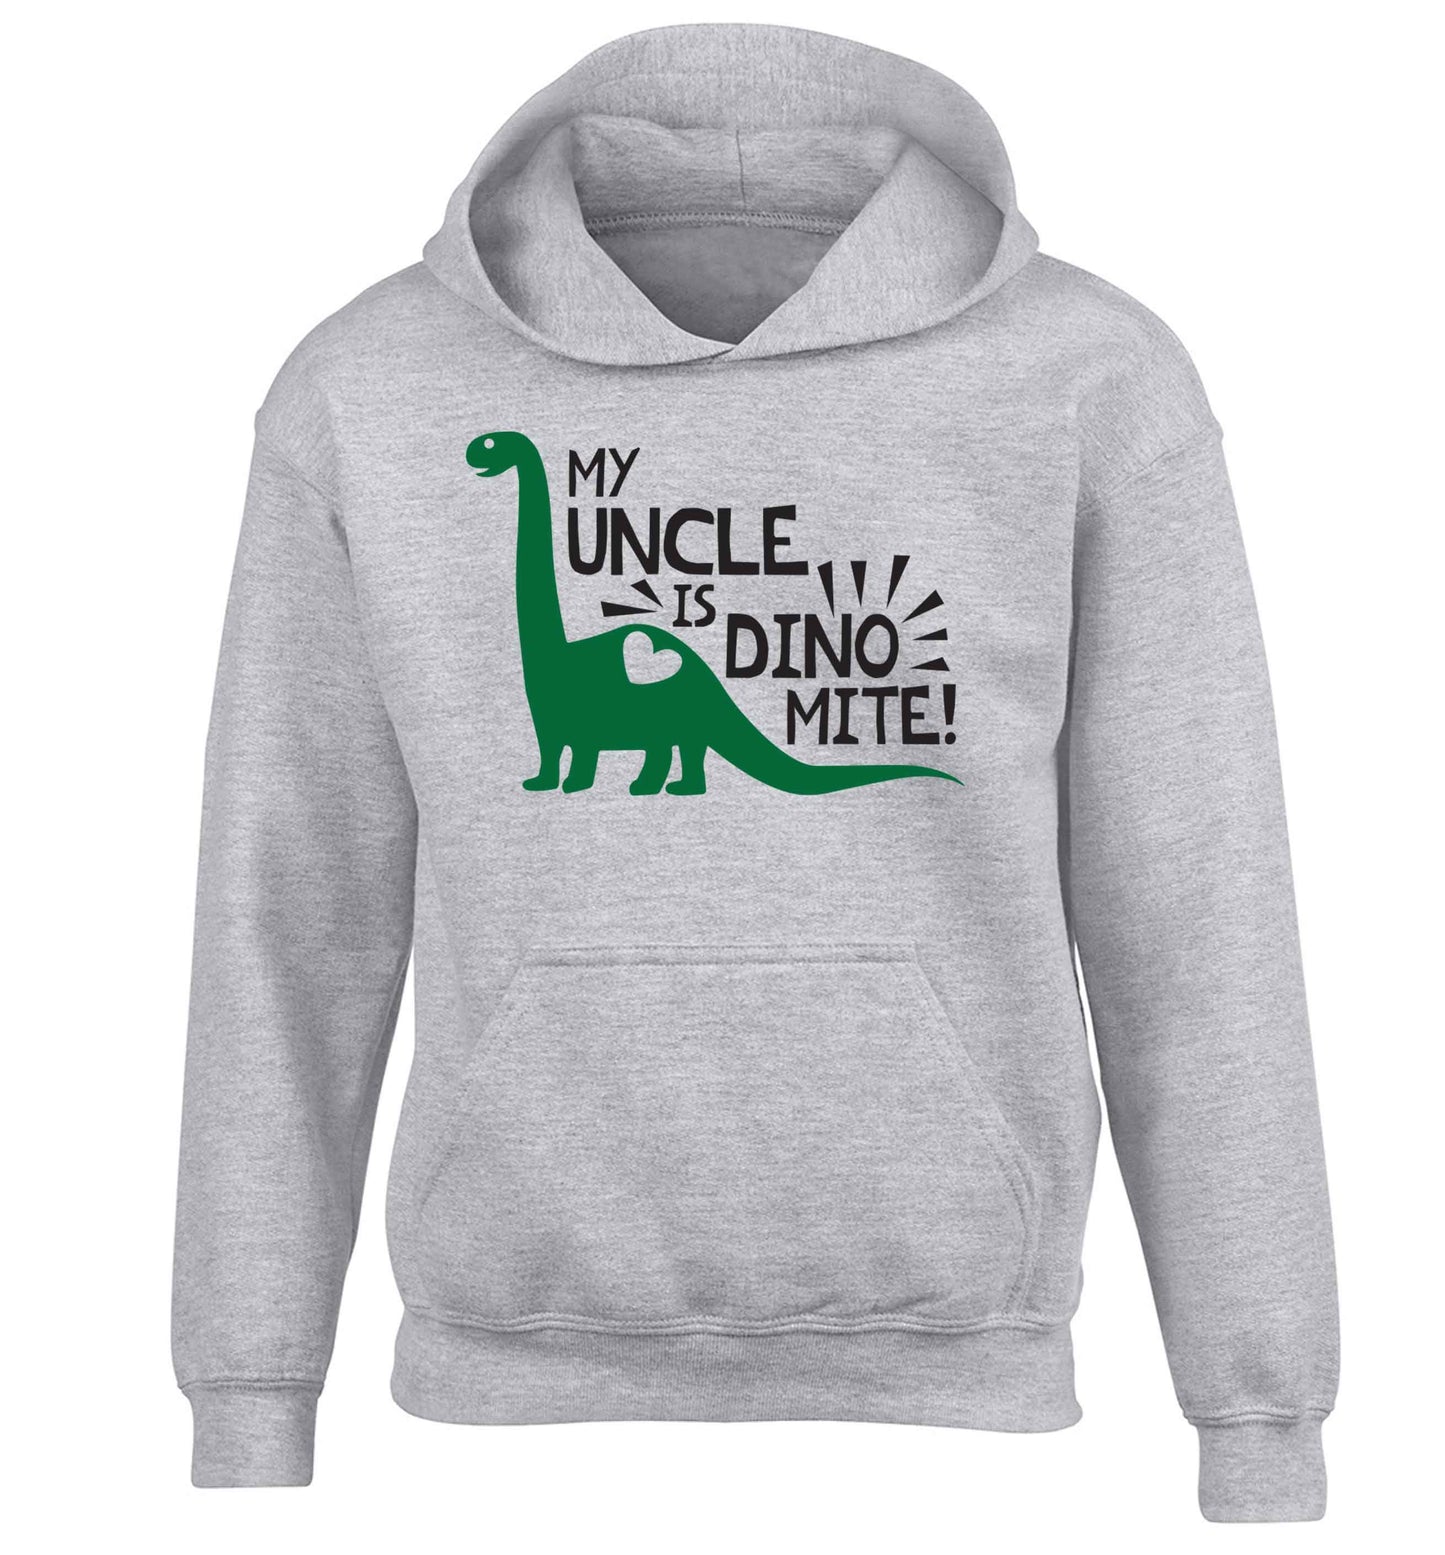 My uncle is dinomite! children's grey hoodie 12-13 Years